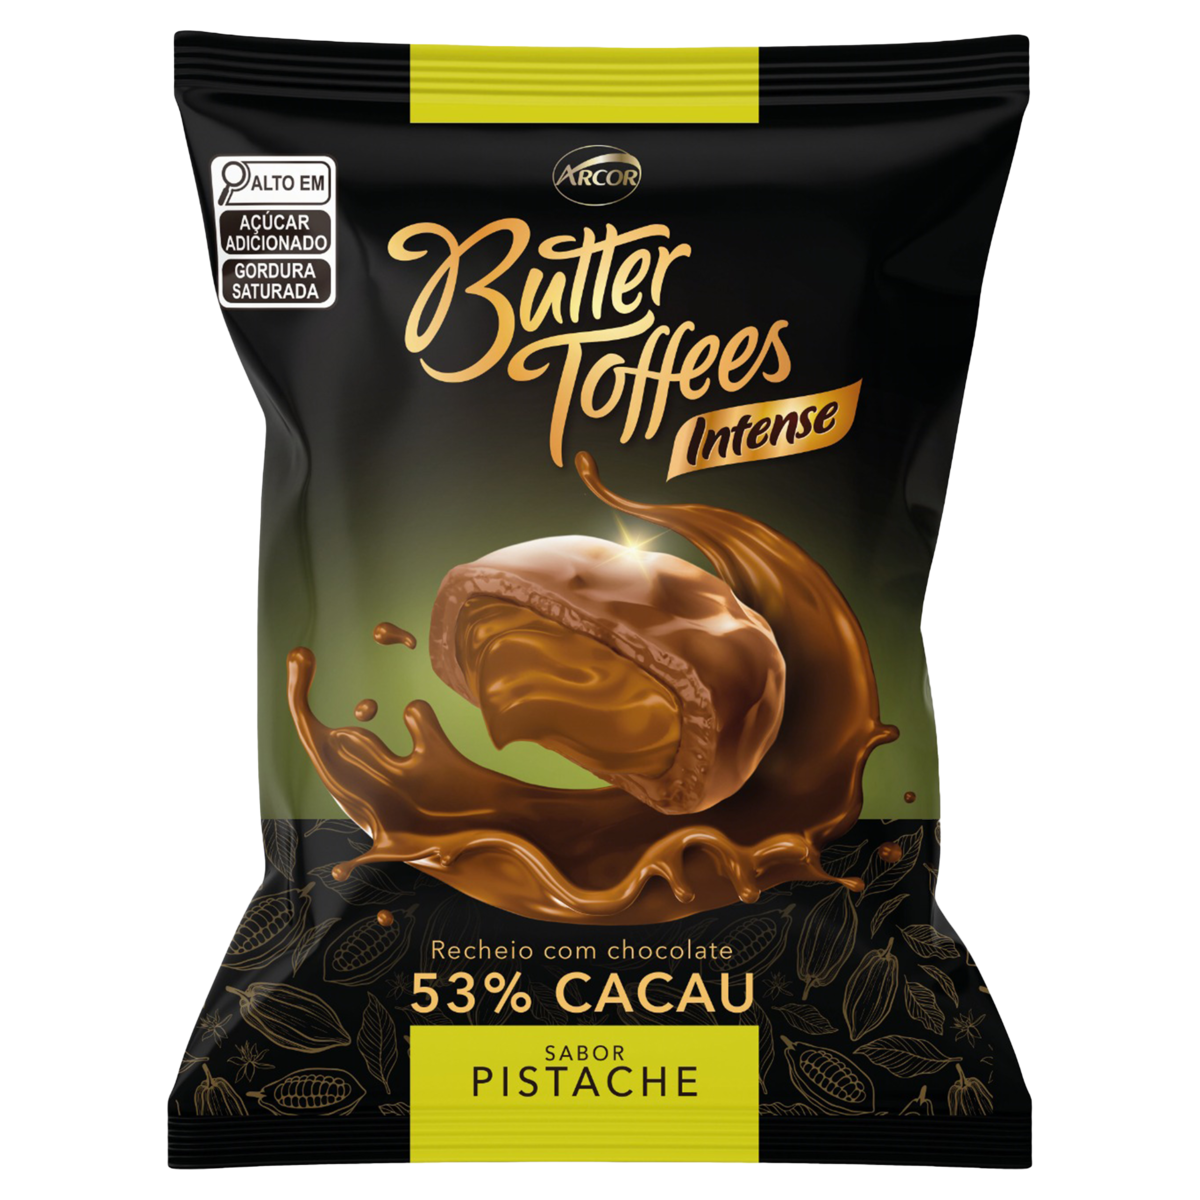 7891118026340 - BALA PISTACHE RECHEIO CHOCOLATE 53% CACAU BUTTER TOFFEES INTENSE PACOTE 90G